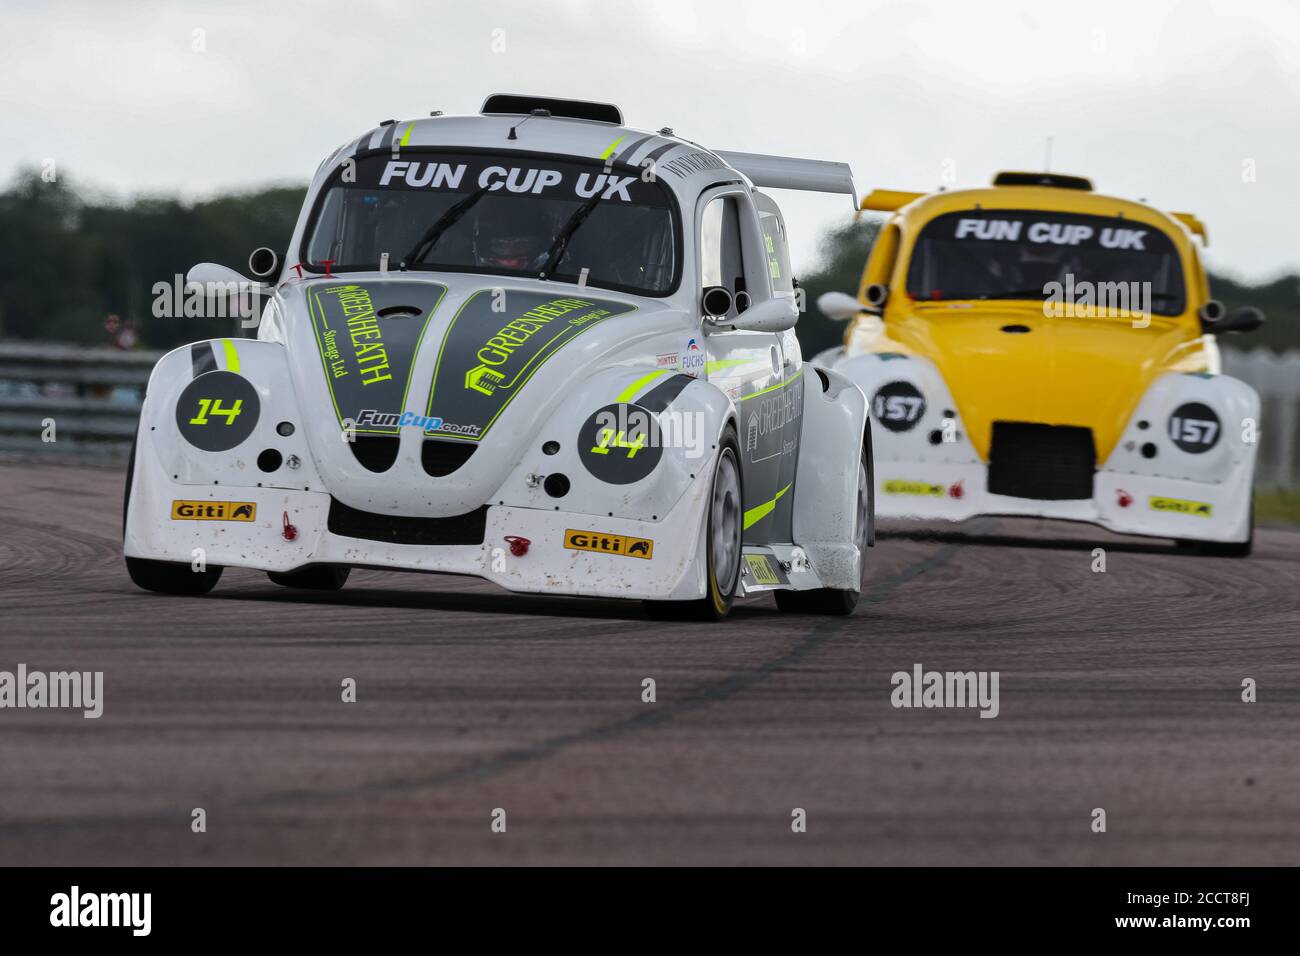 VW Fun Cup #72 testing at Zolder Belgium Stock Photo - Alamy